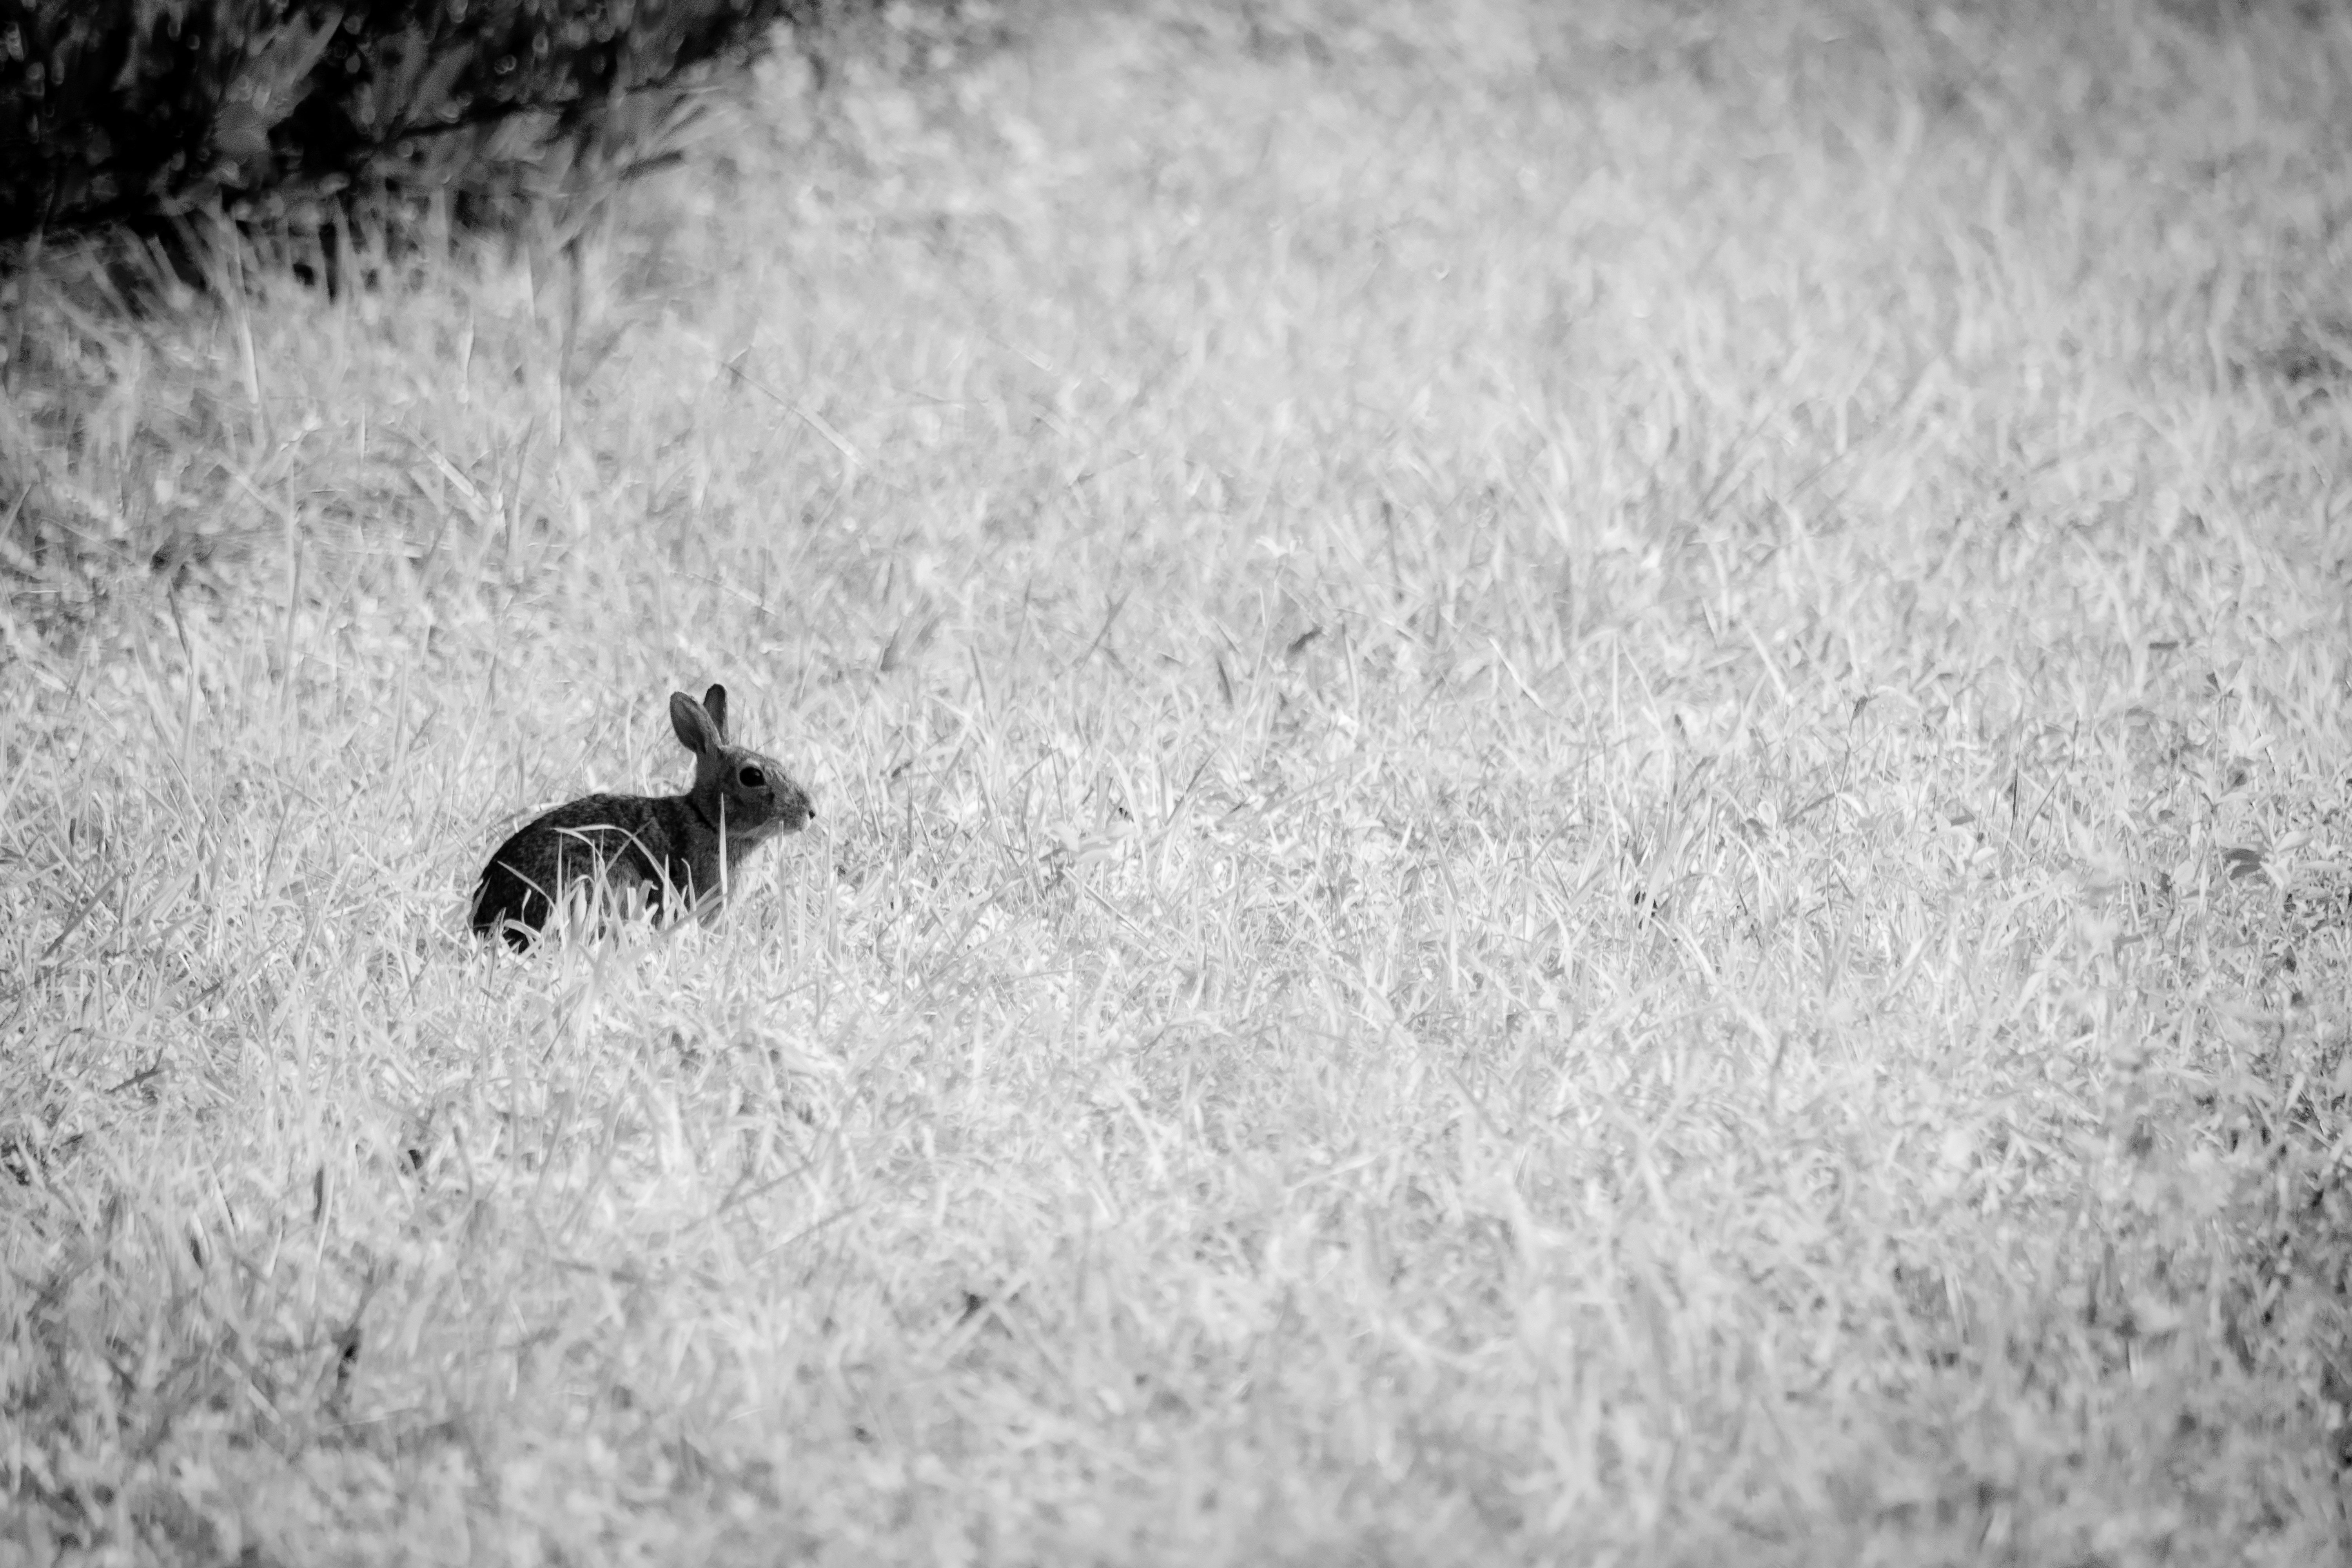 grayscale photo of rabbit on grass field